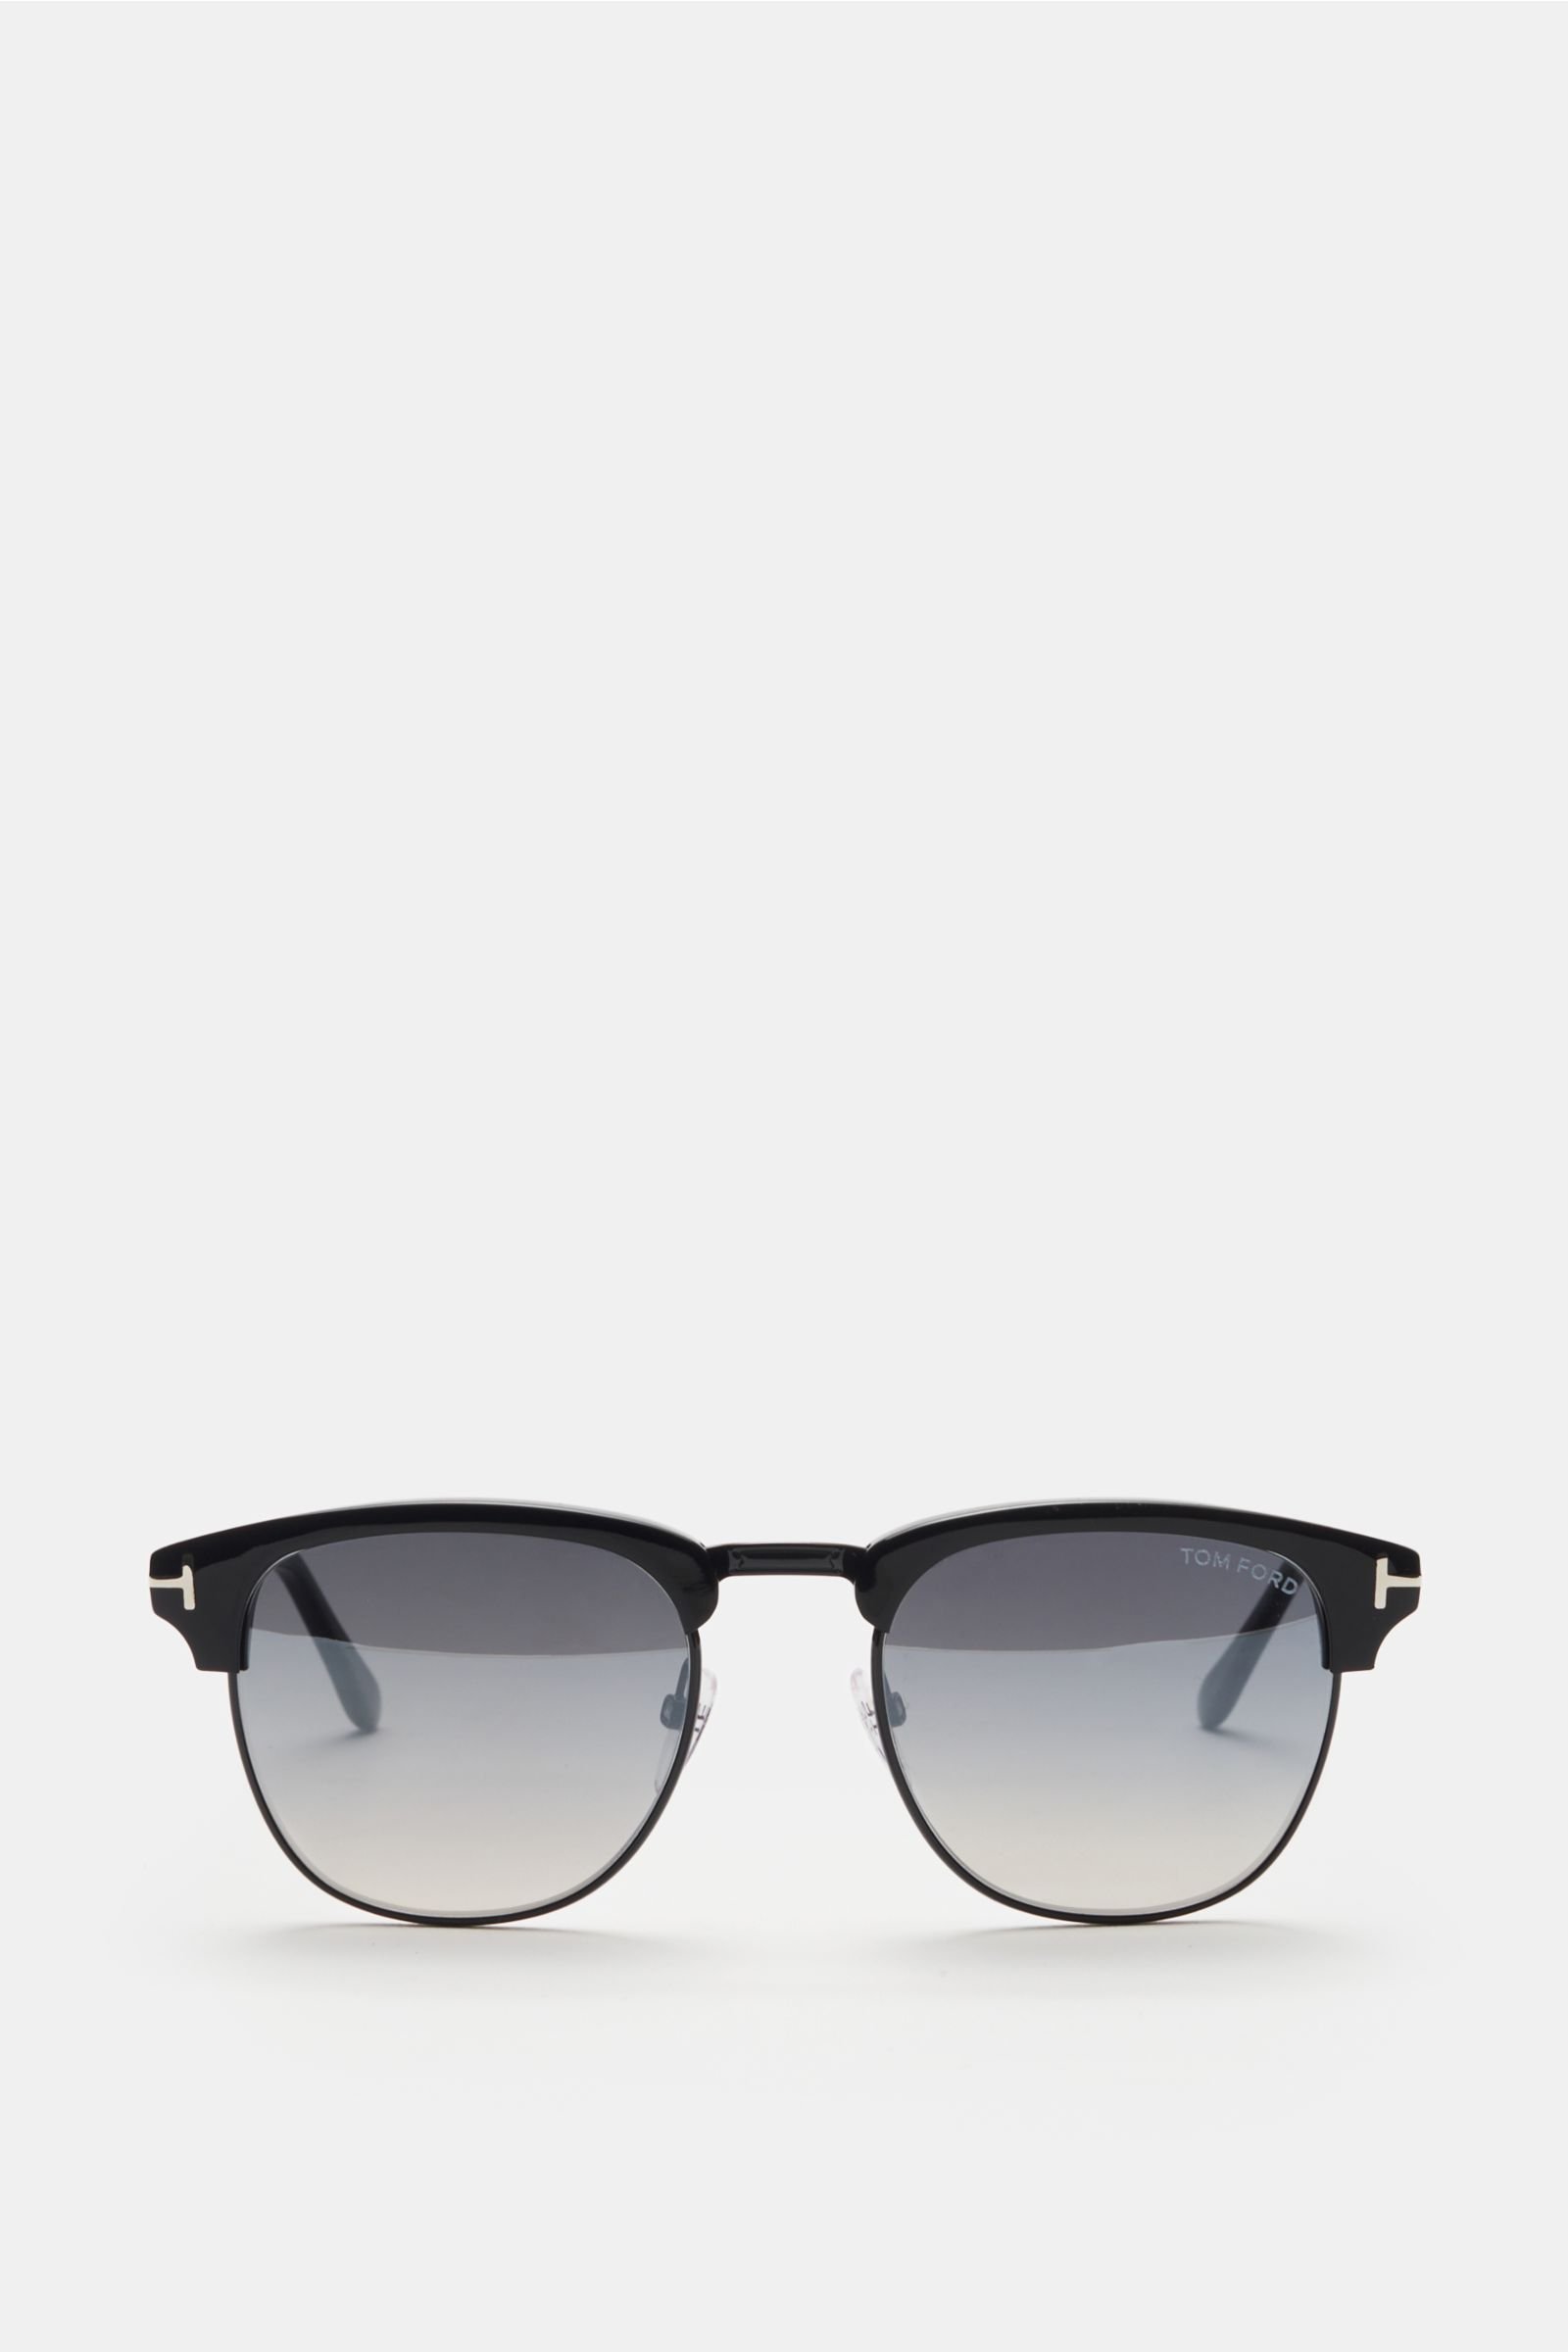 Sunglasses 'Henry' black/grey